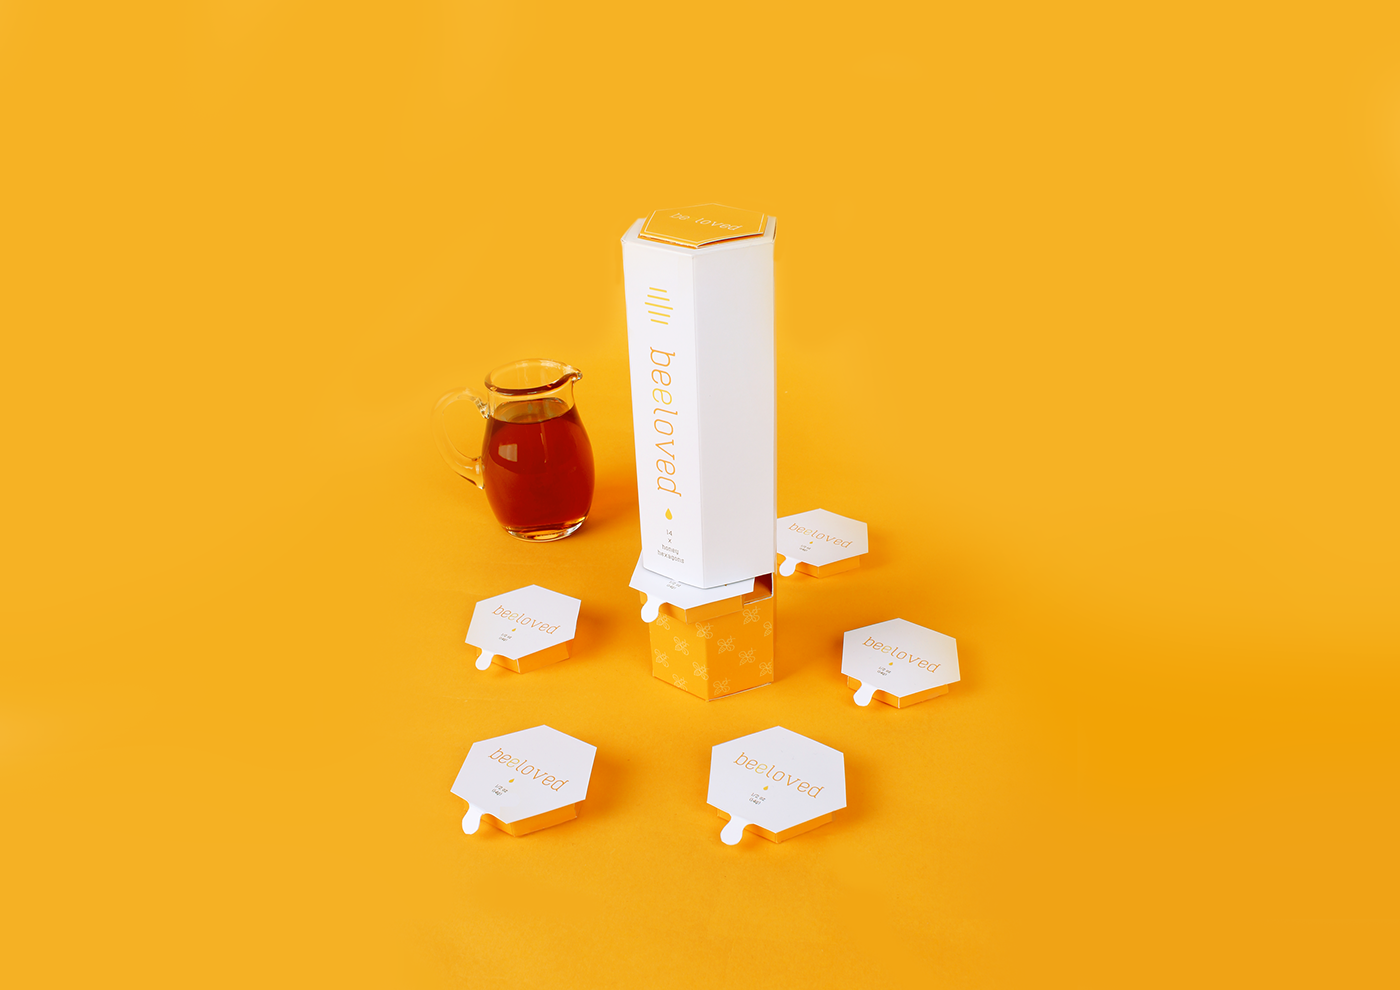 Packaging packaging design beeloved honey Food  packets simple Fun vibrant creative